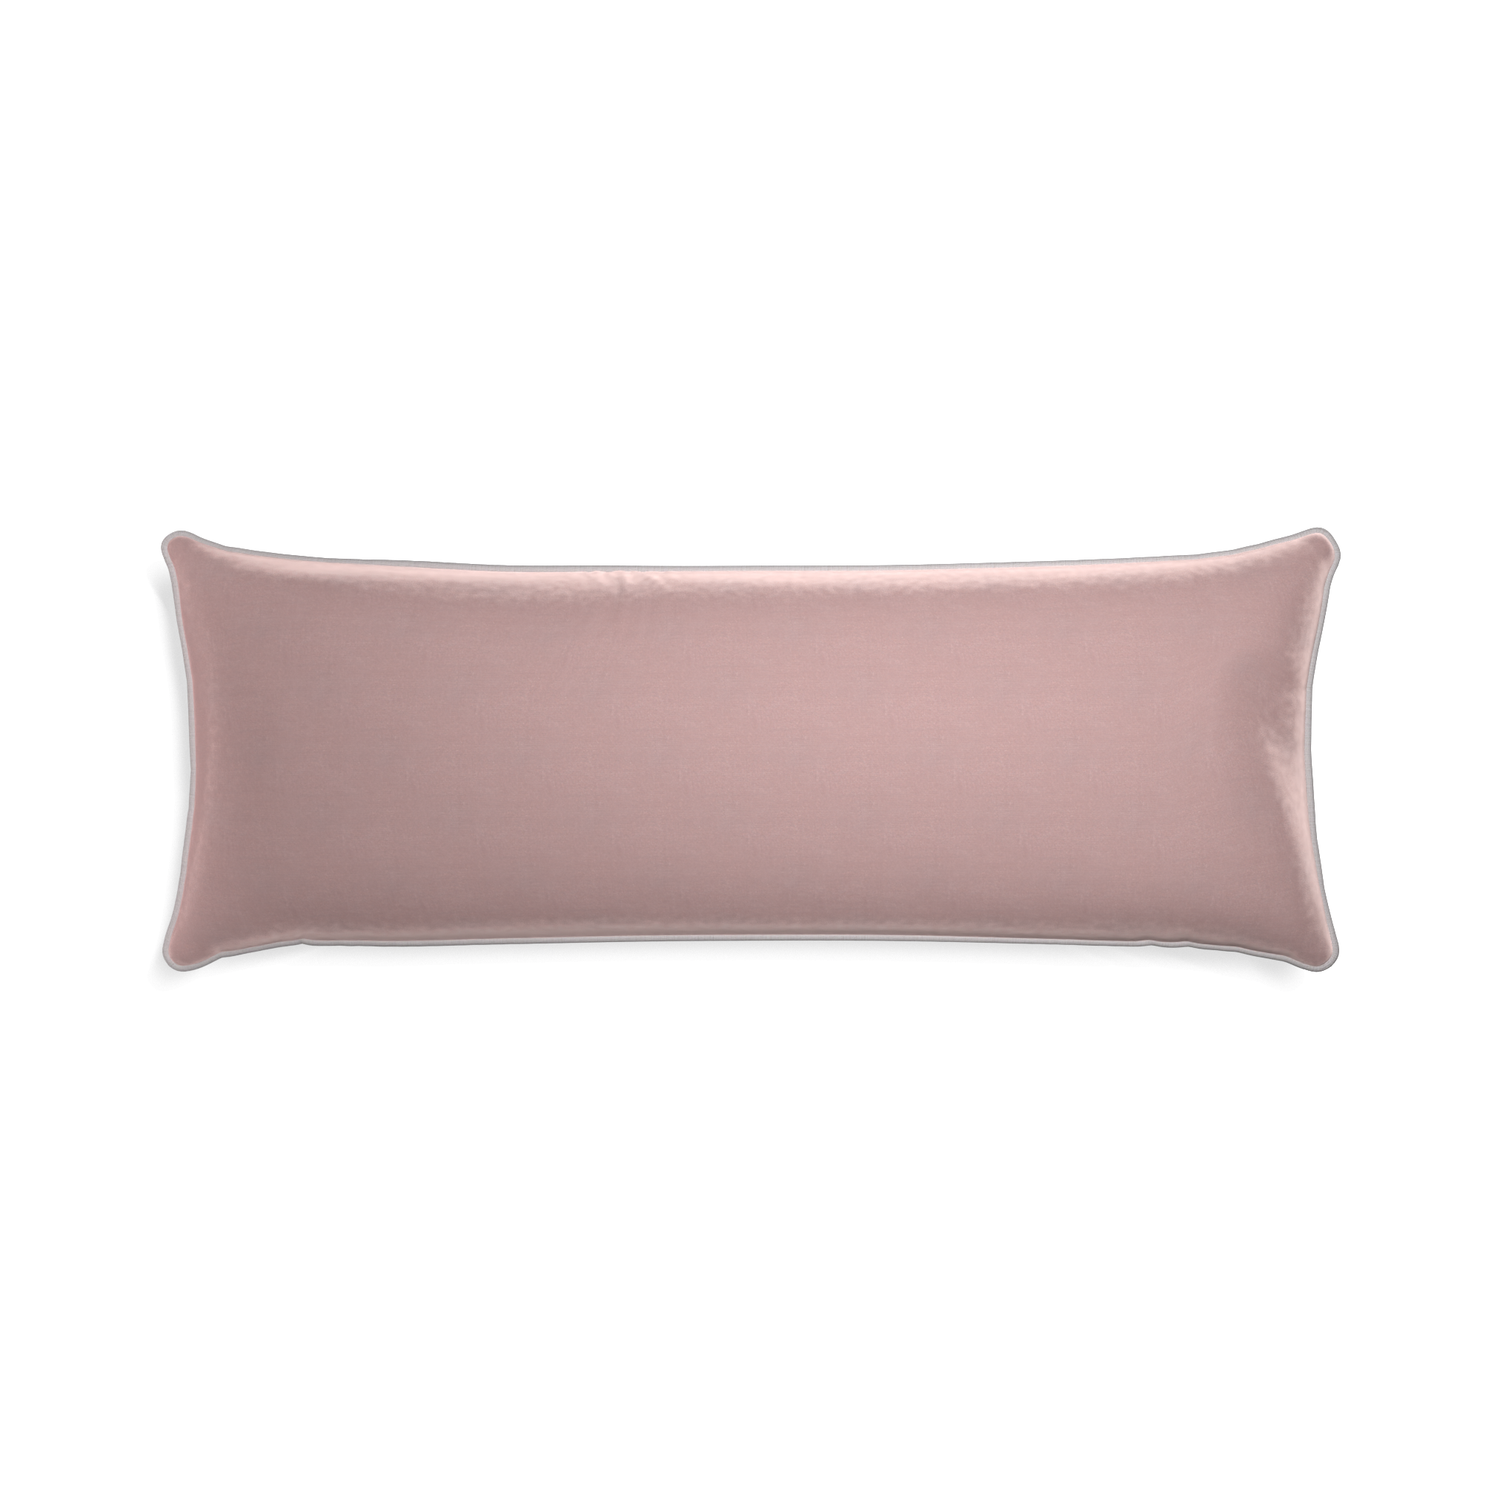 Xl-lumbar mauve velvet custom pillow with pebble piping on white background